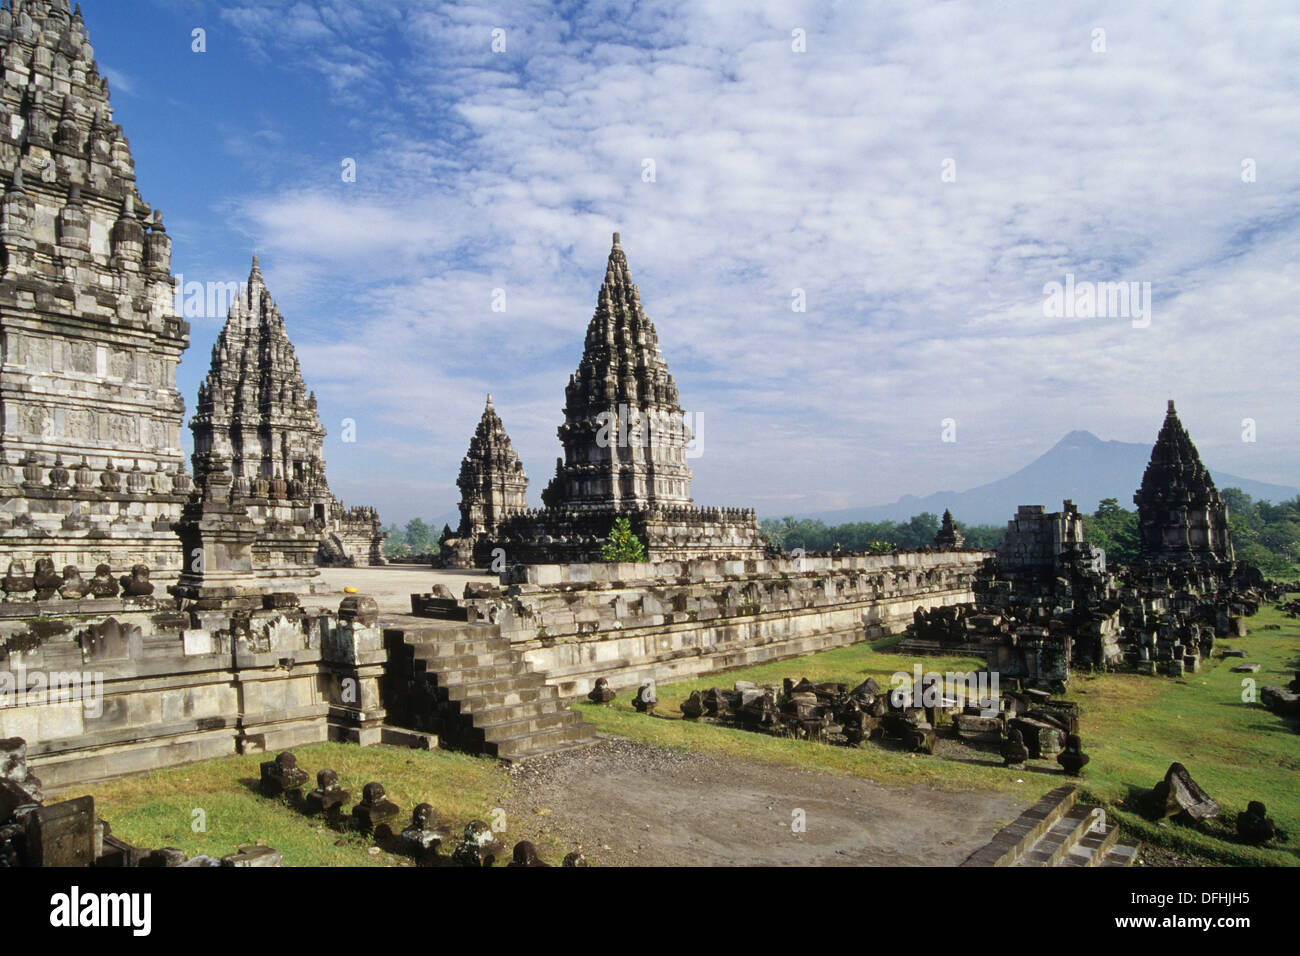 Main Shrine Prambanan Hindu Temple Compound In Java Island Greater